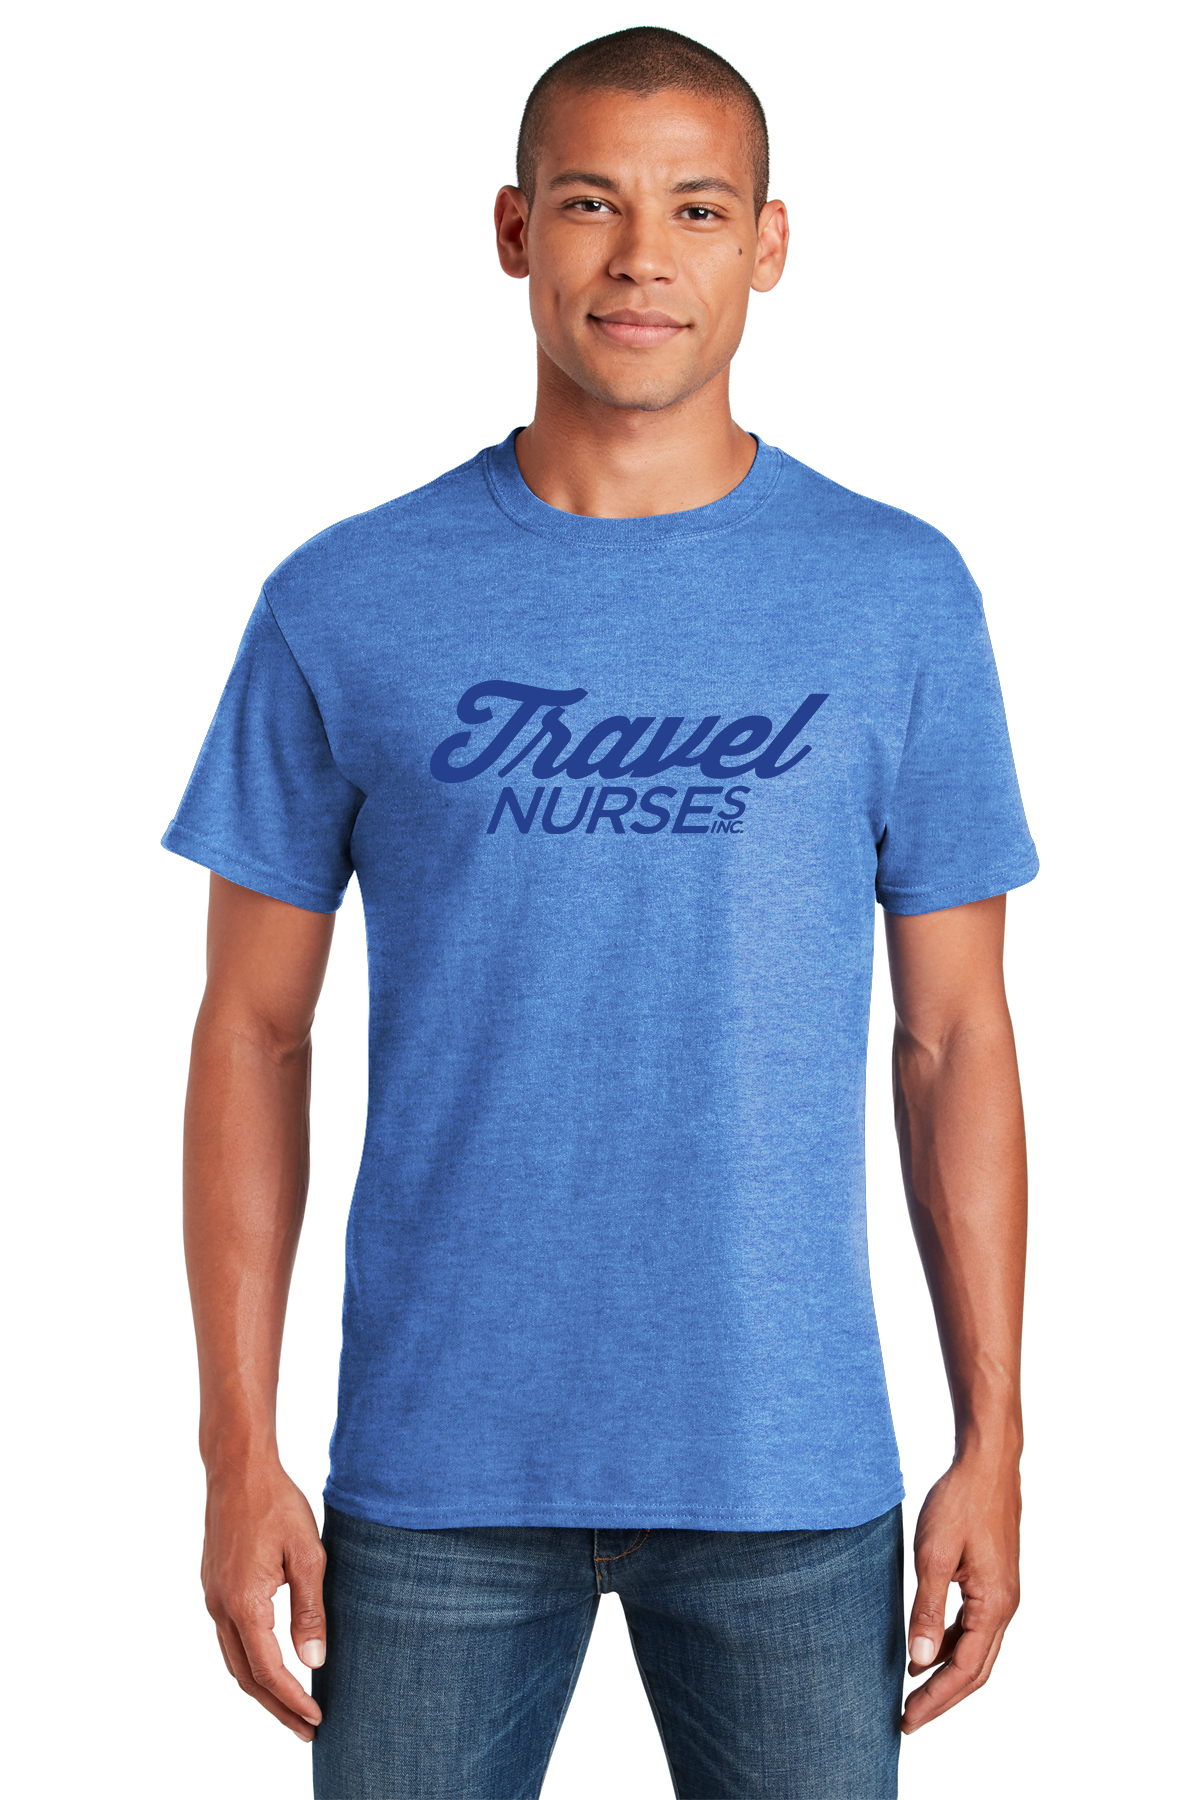 Travel Nurses, Inc. Logo Tee Blue